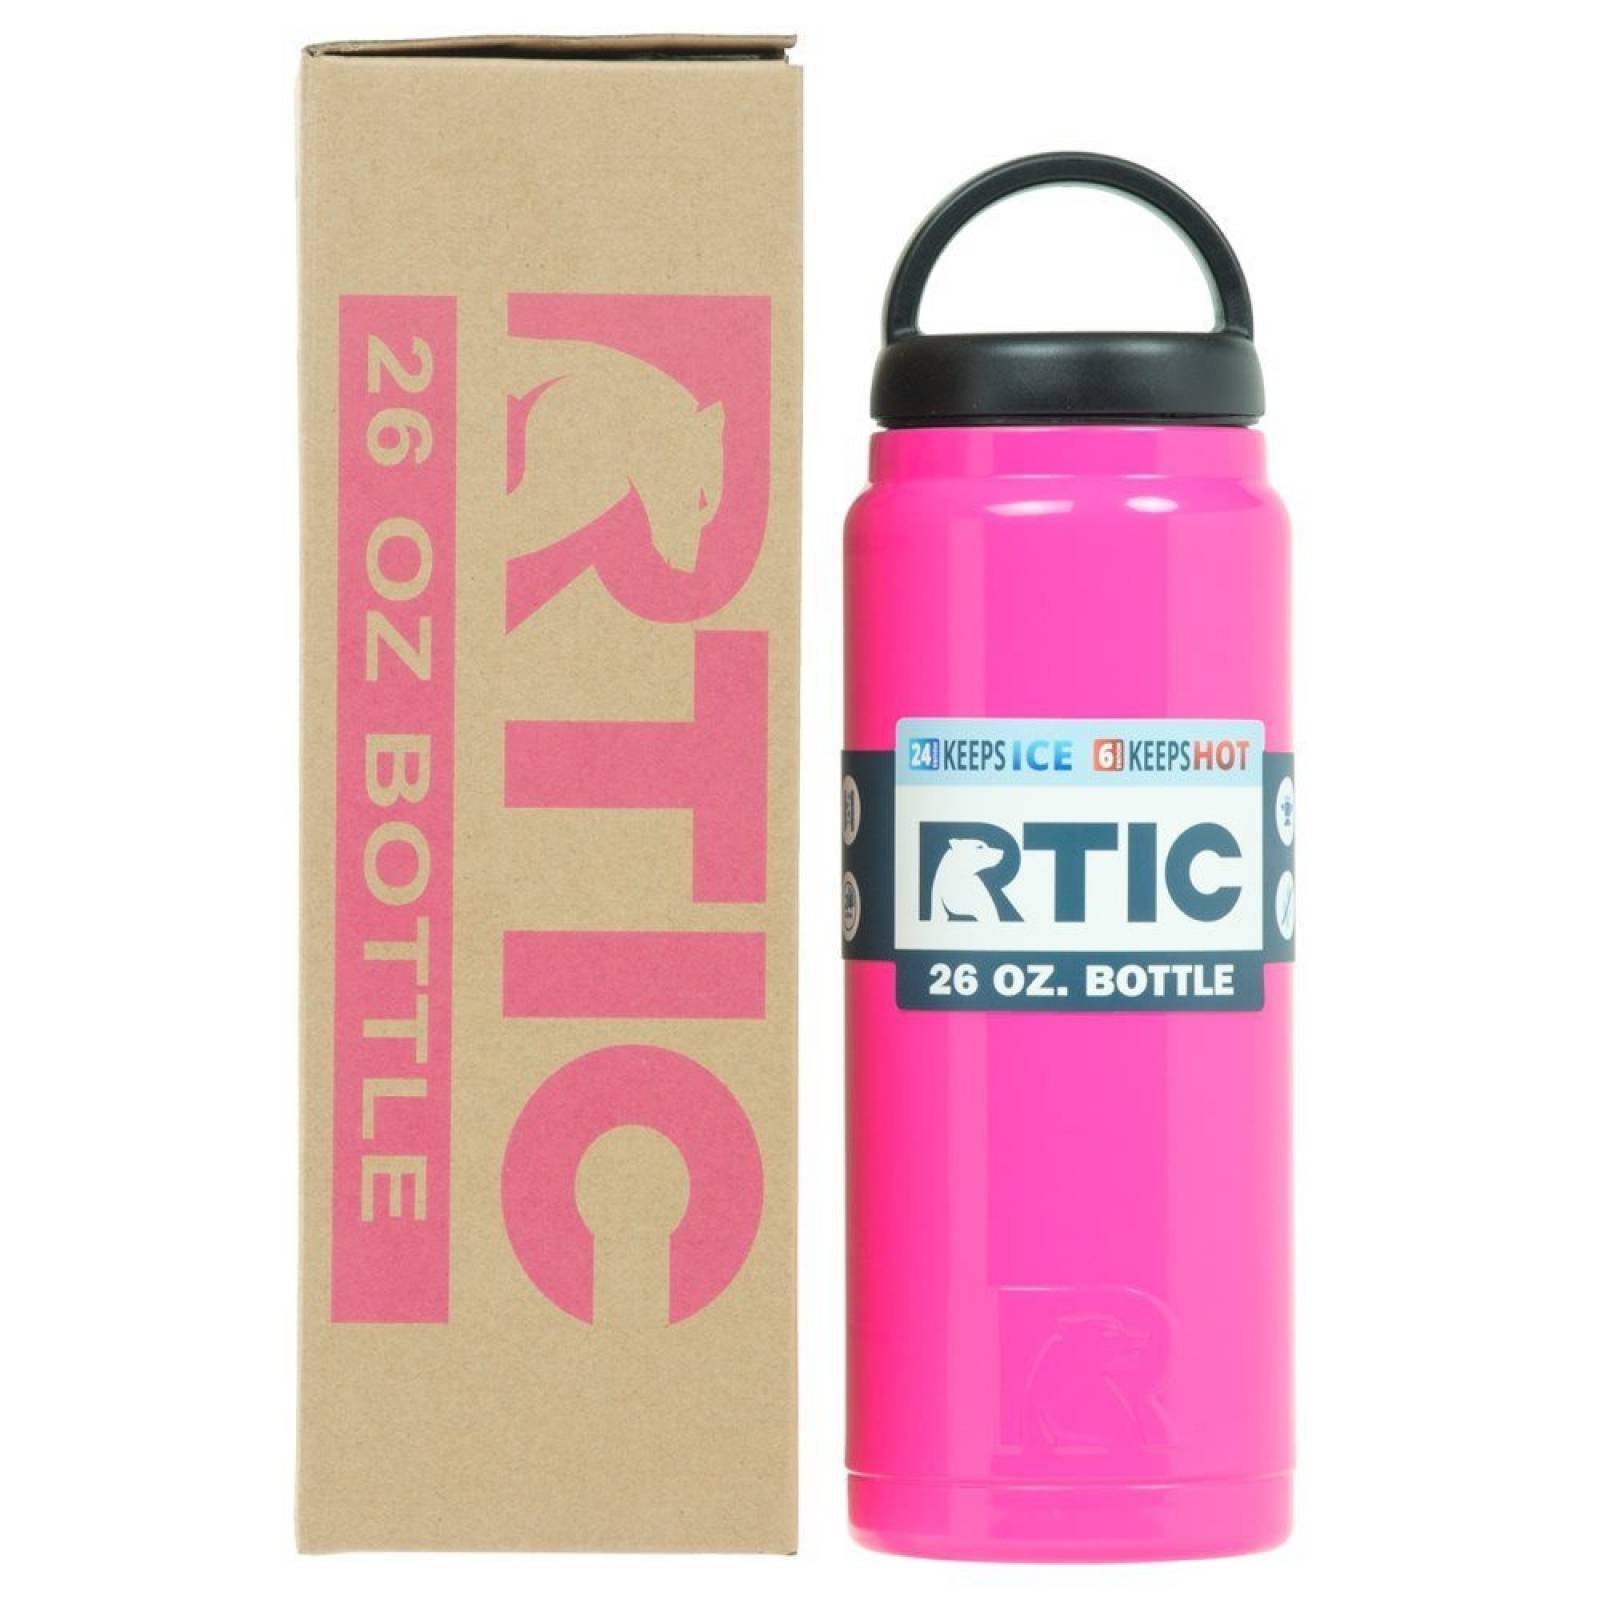 RTIC Bottle 26 oz. Pink   579